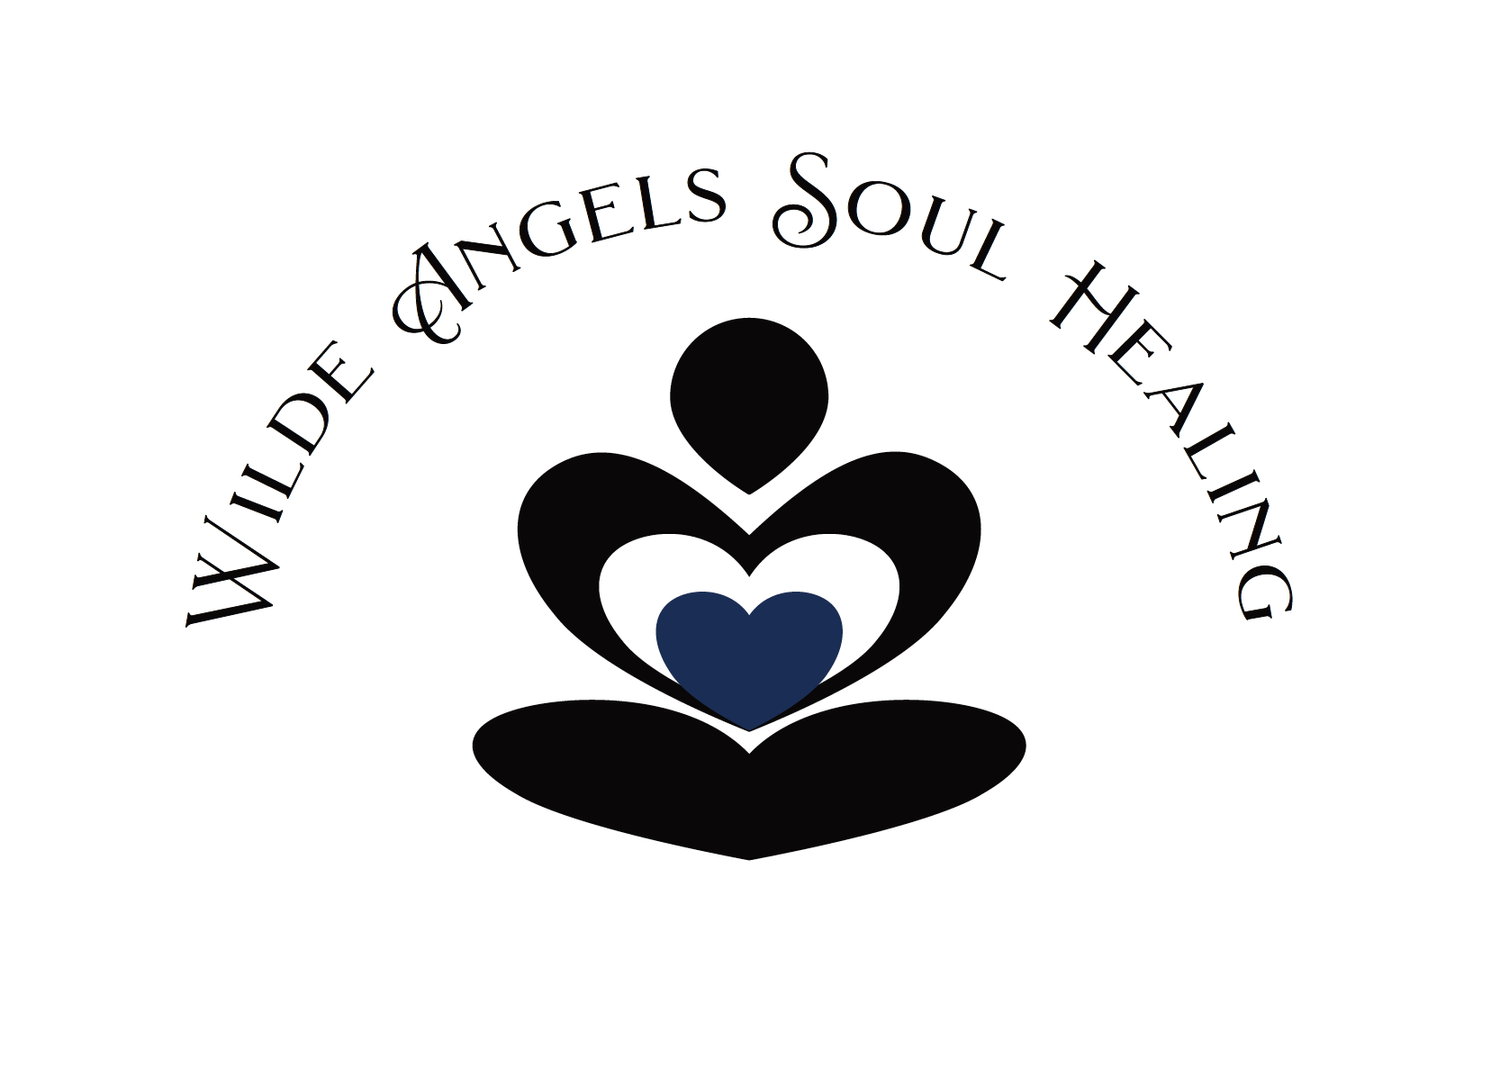 Wilde Angels Soul Healing